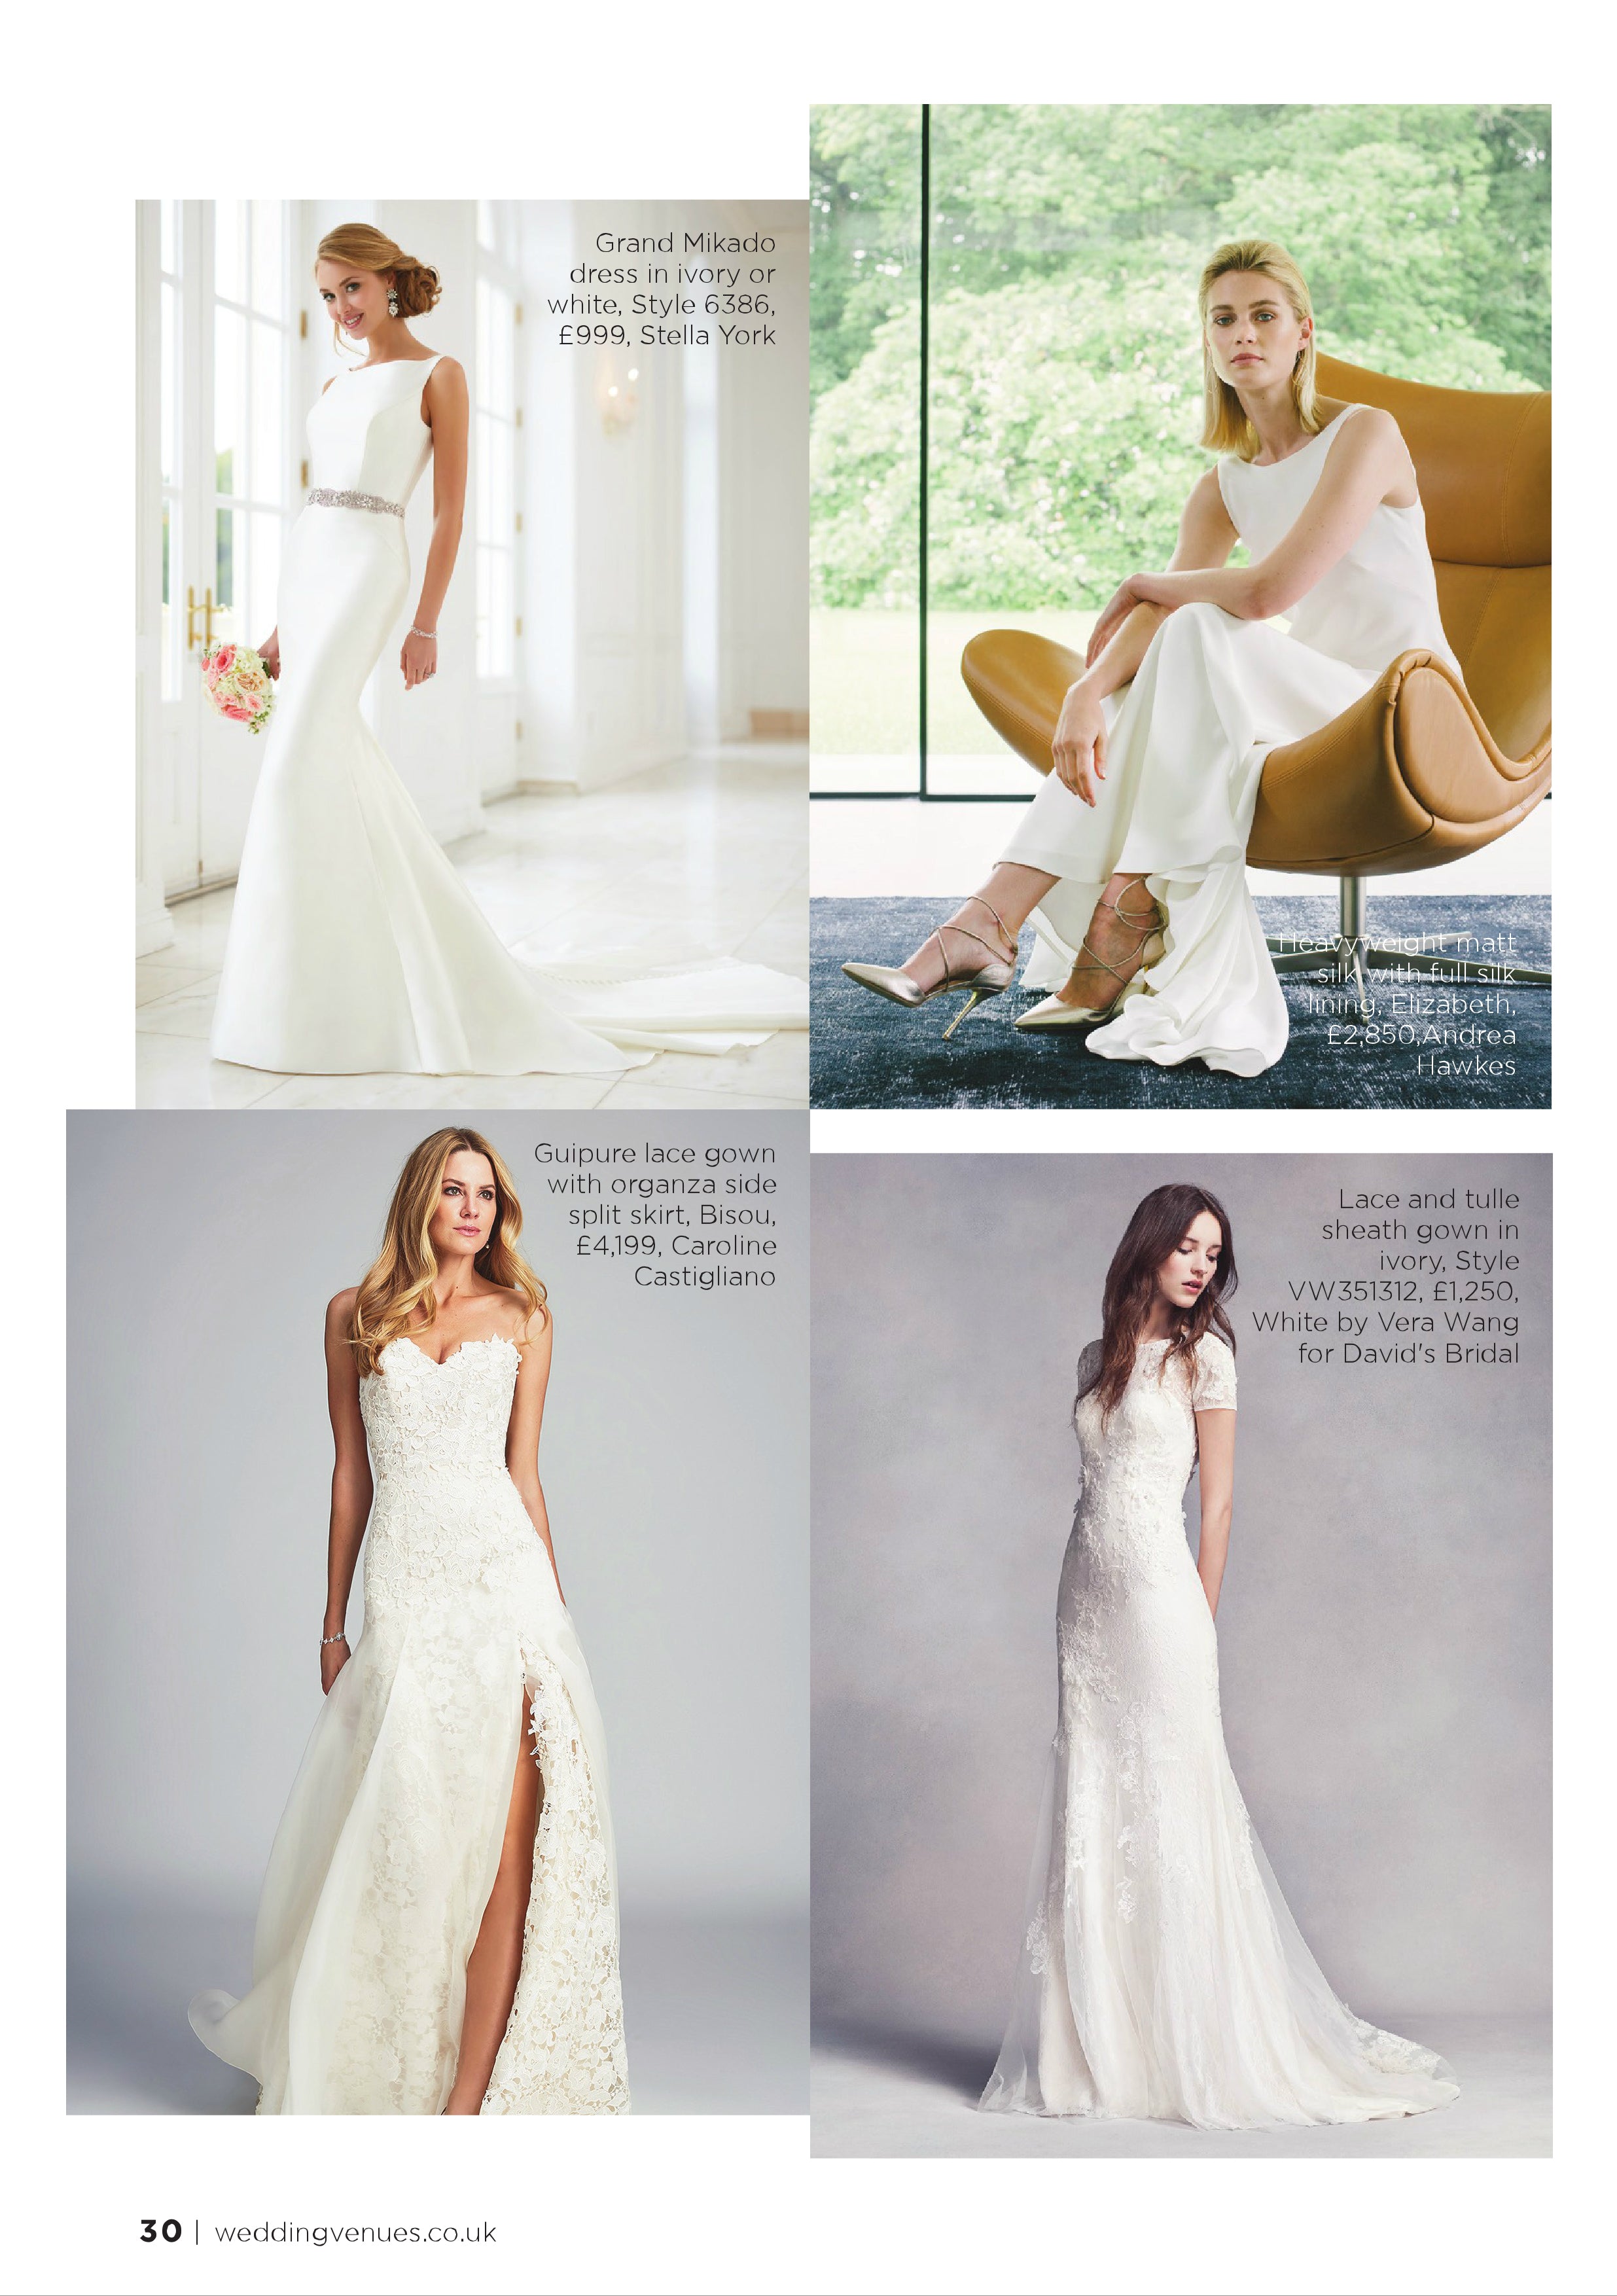 Bisou designer wedding gowns by Caroline Castigliano